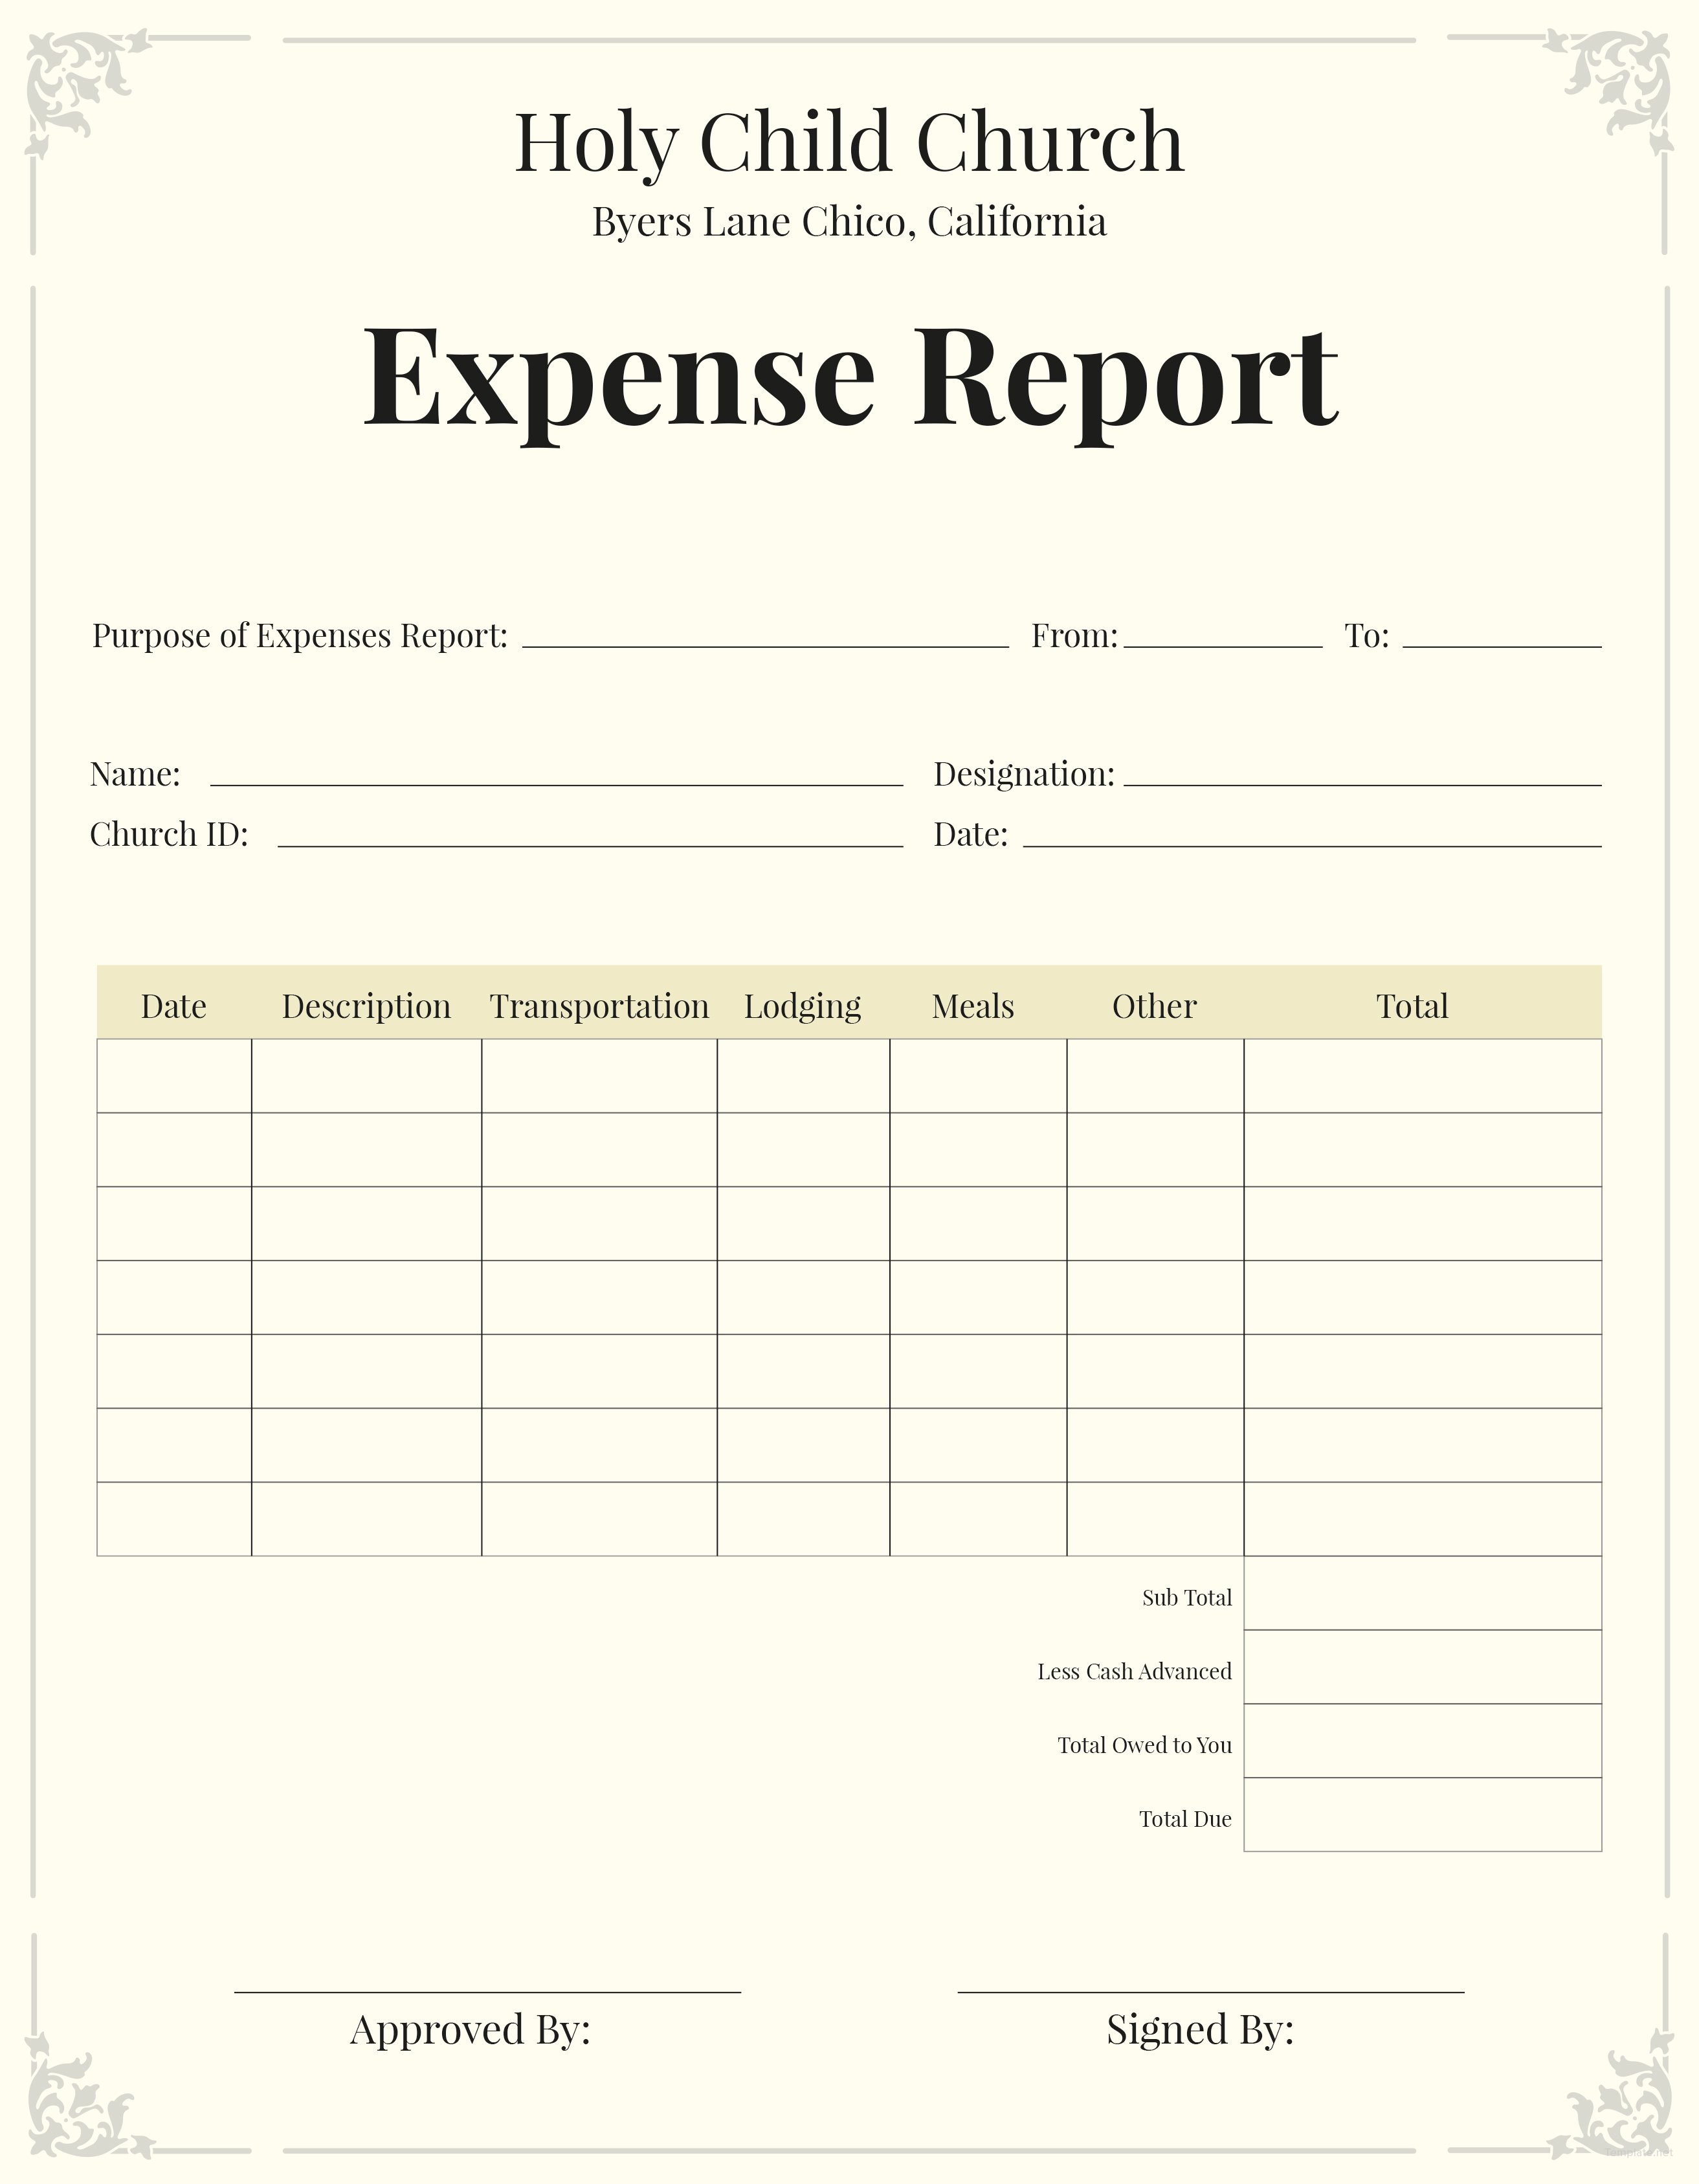 Free Church Expense Report Template in Microsoft Word, Microsoft